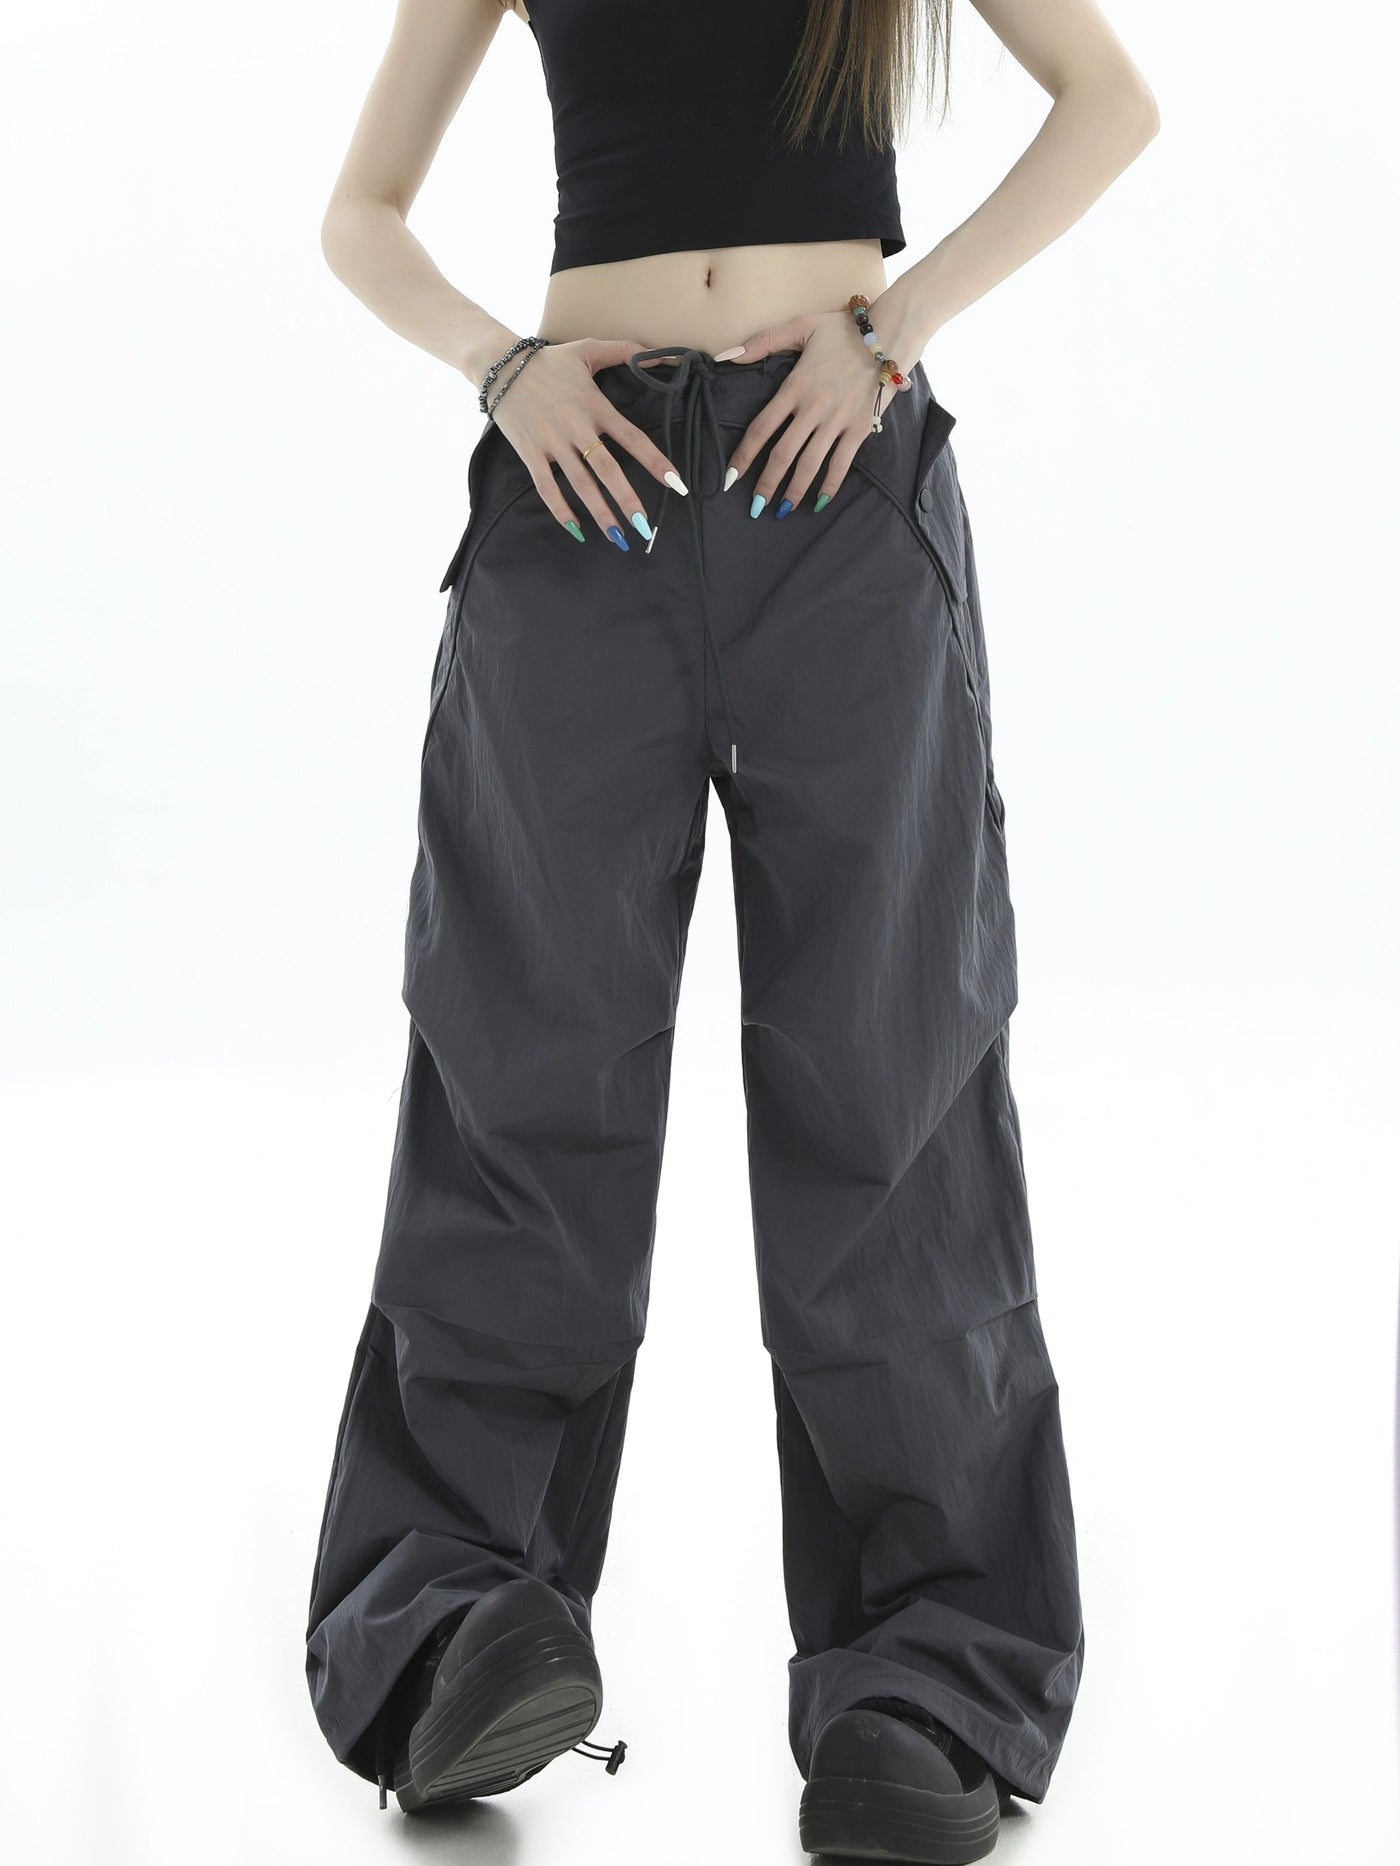 Drawstring Solid Color Pants Korean Street Fashion Pants By INS Korea Shop Online at OH Vault